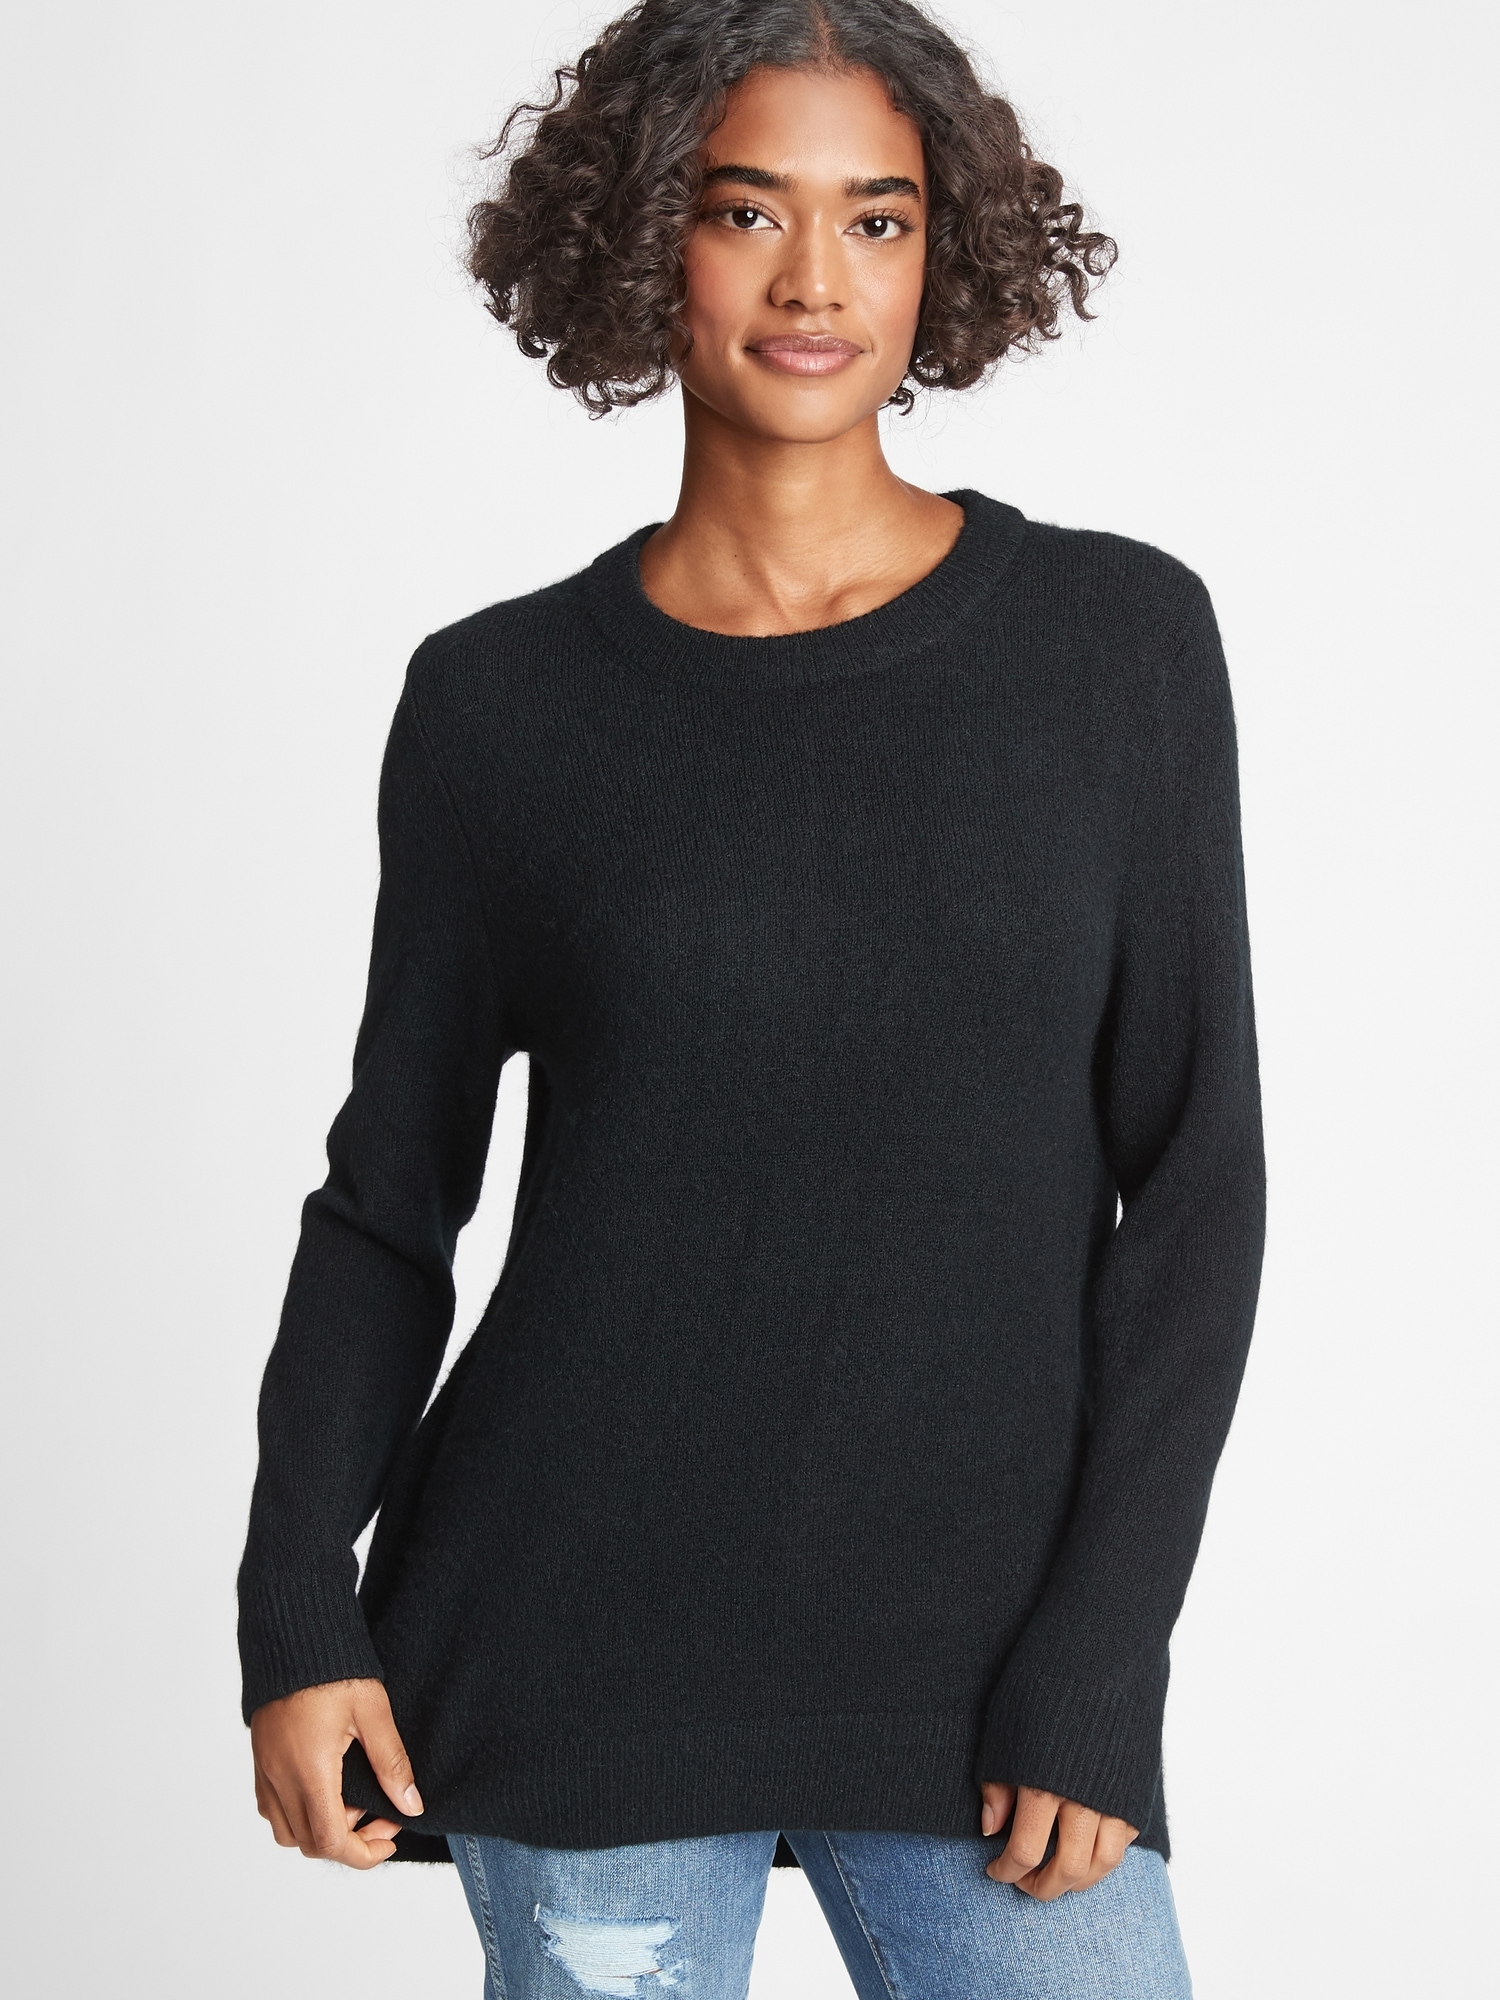 Tunic Crewneck Sweater | Gap Factory